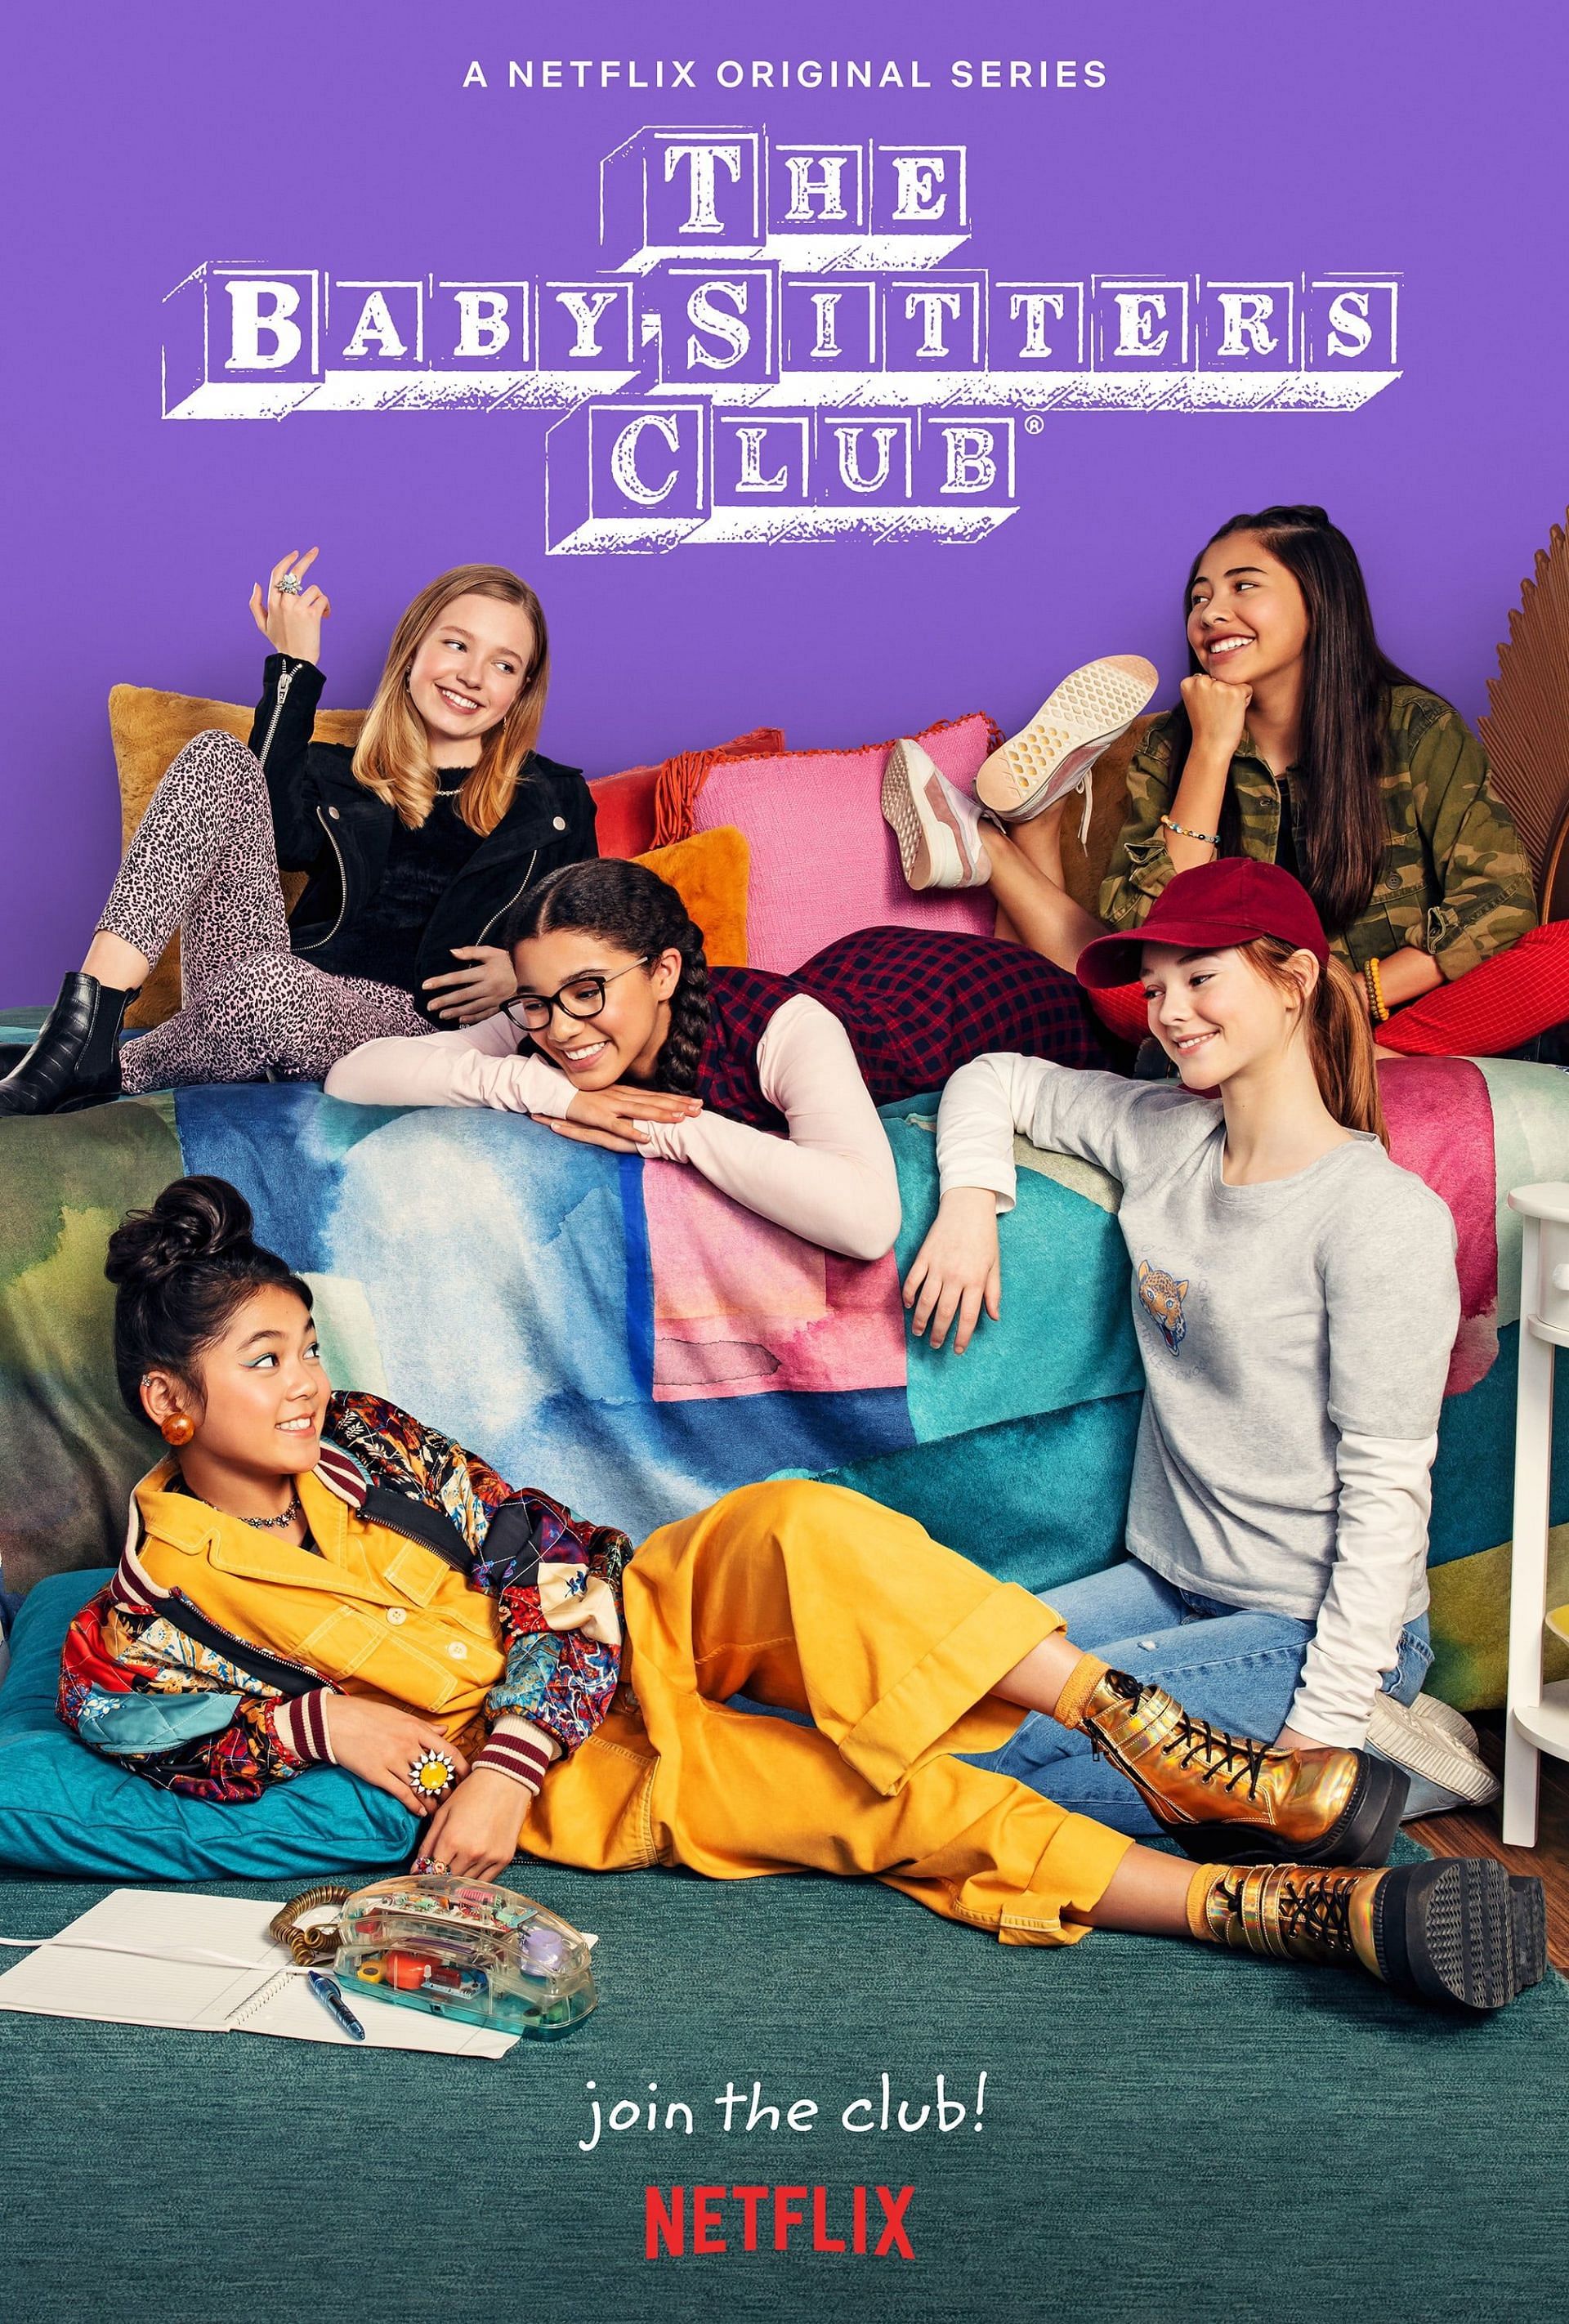 The Babysitters Club (Image via Netflix)